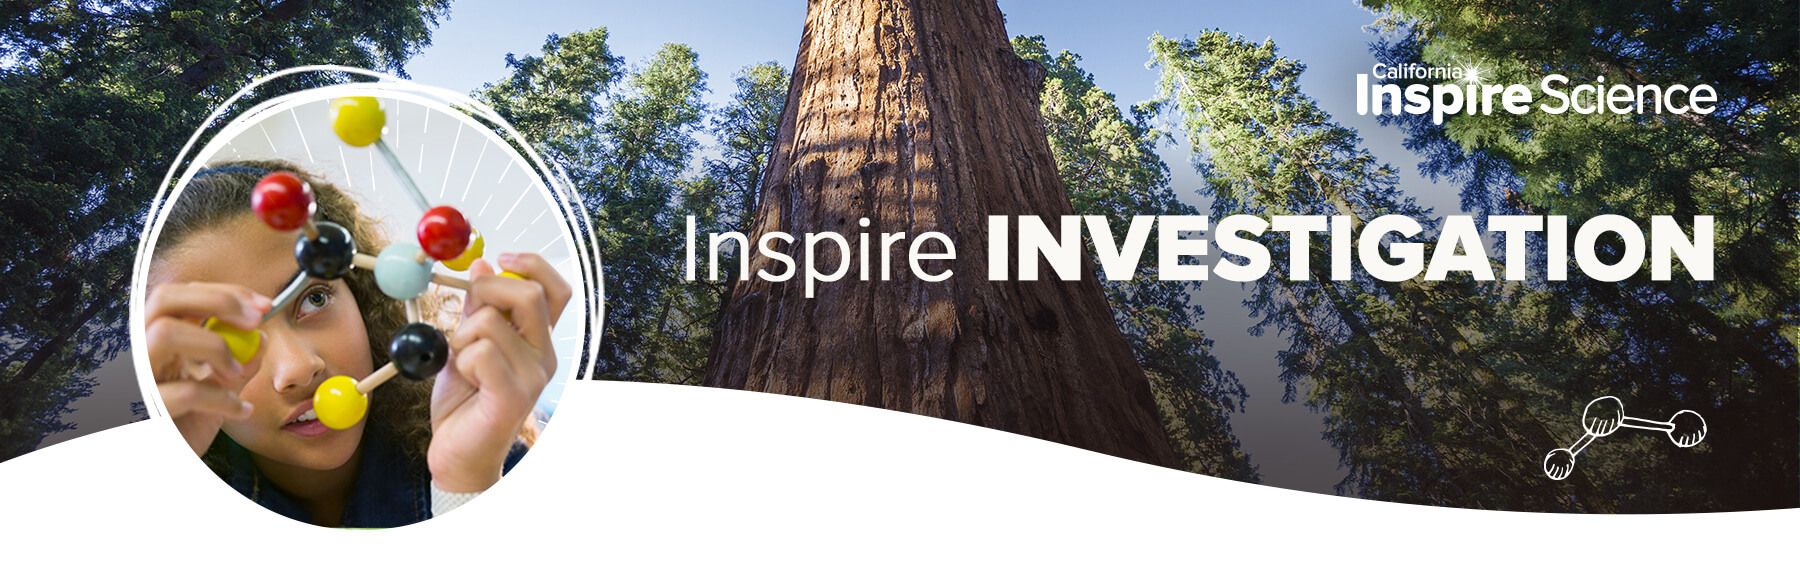 California Inspire Science, Inspire Investigation